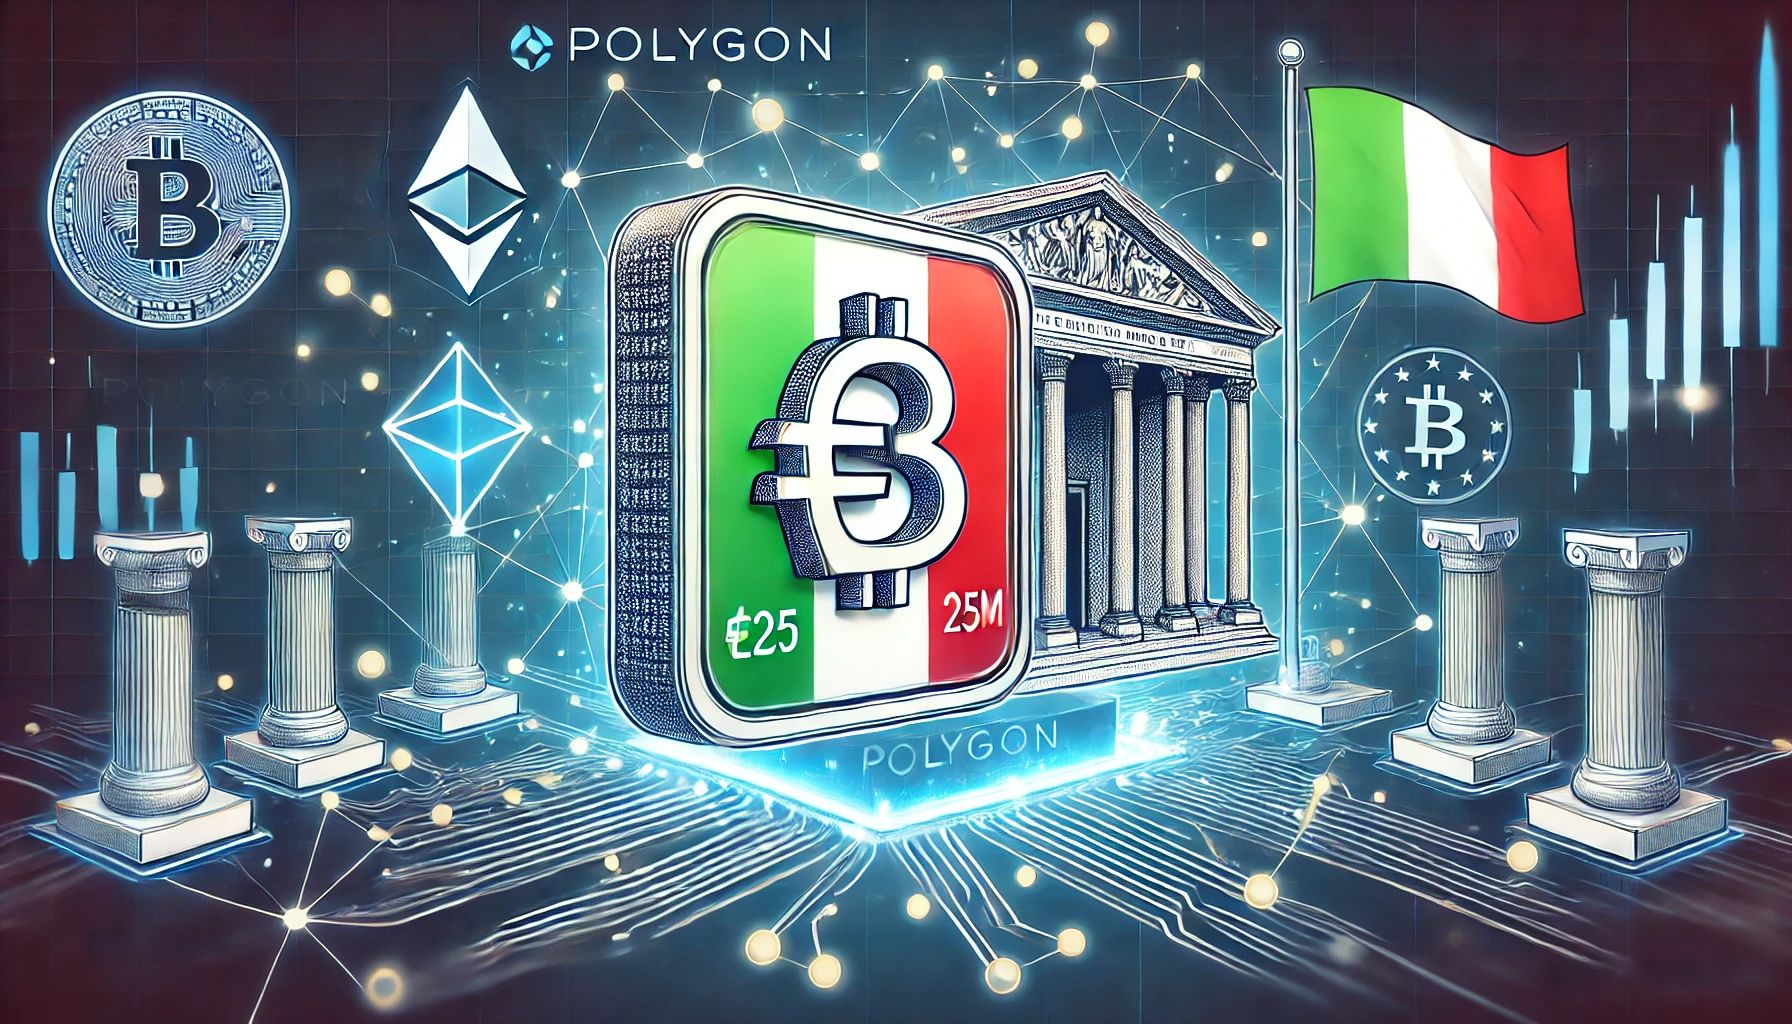 Polygon Powers Italy’s €25M Digital Bond Issuance in ECB Blockchain Trial